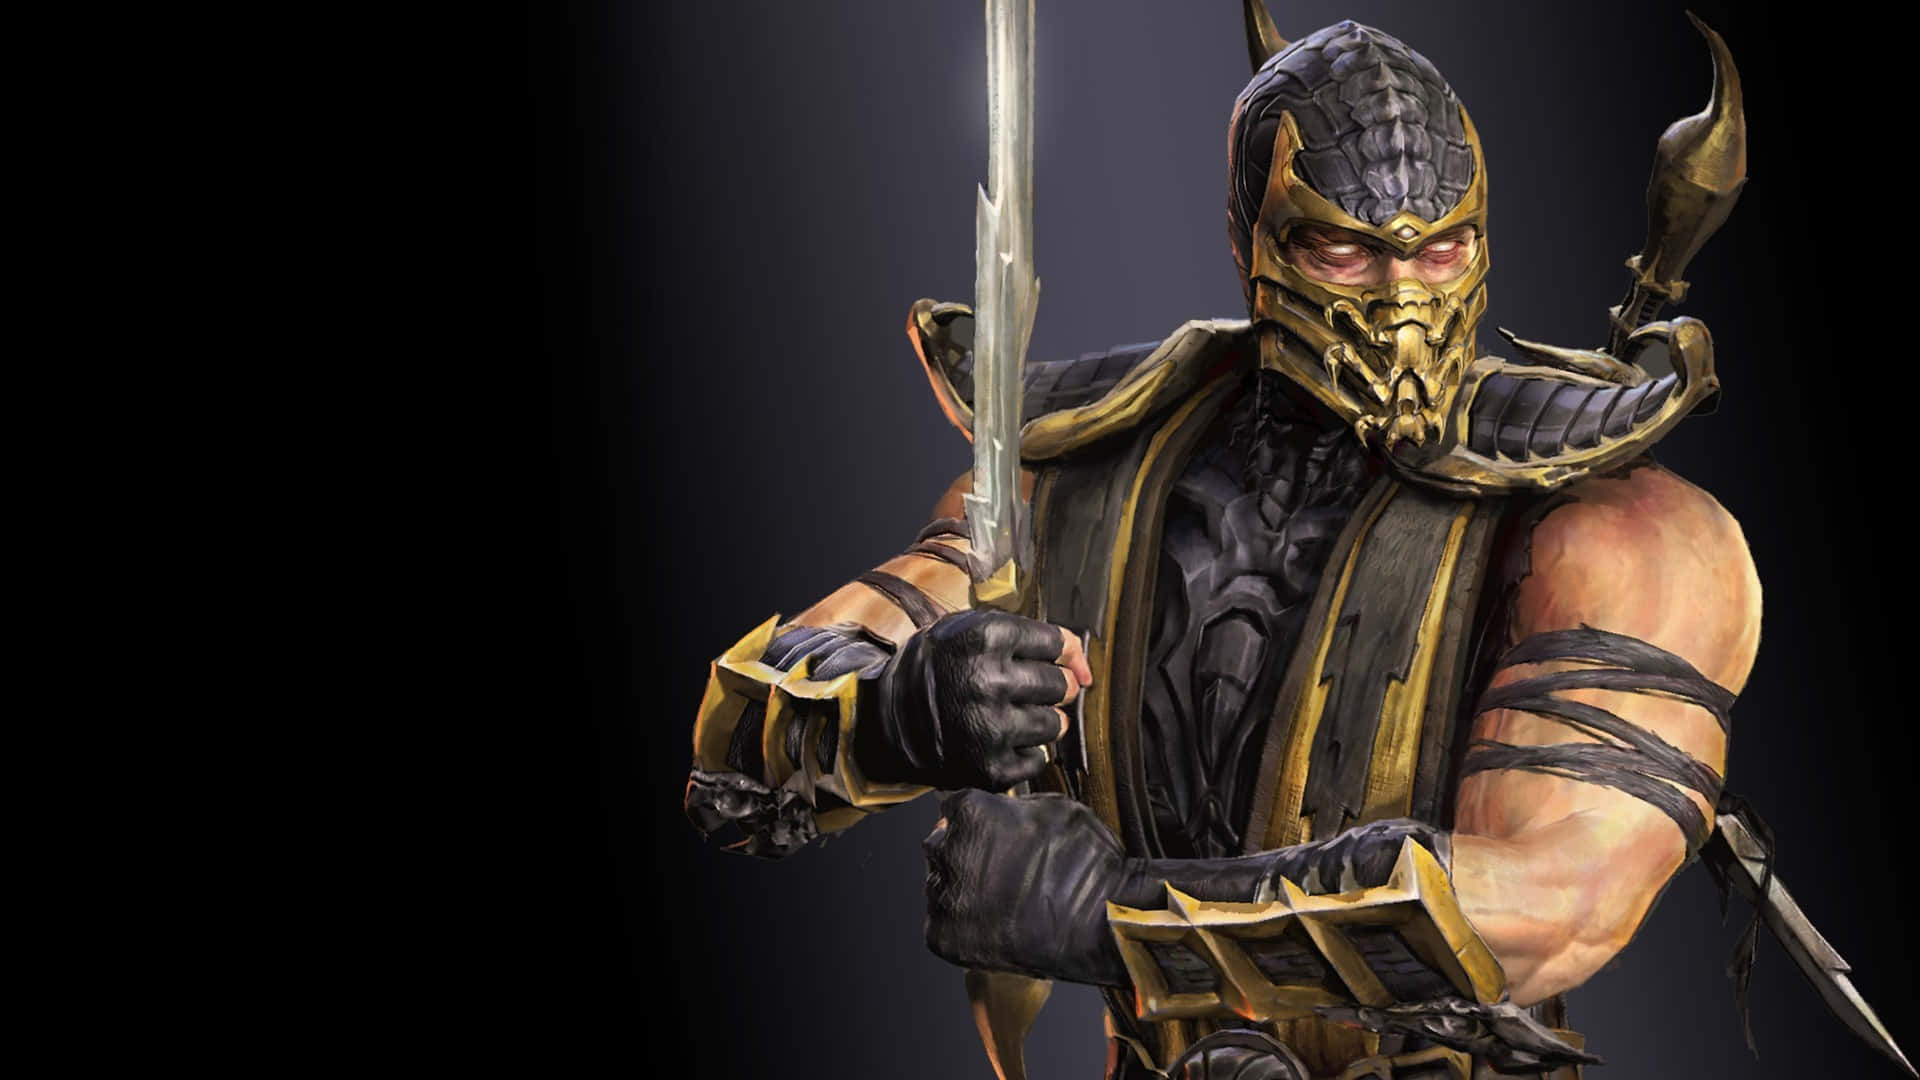 Prepare for Battle with Scorpion from Mortal Kombat Wallpaper